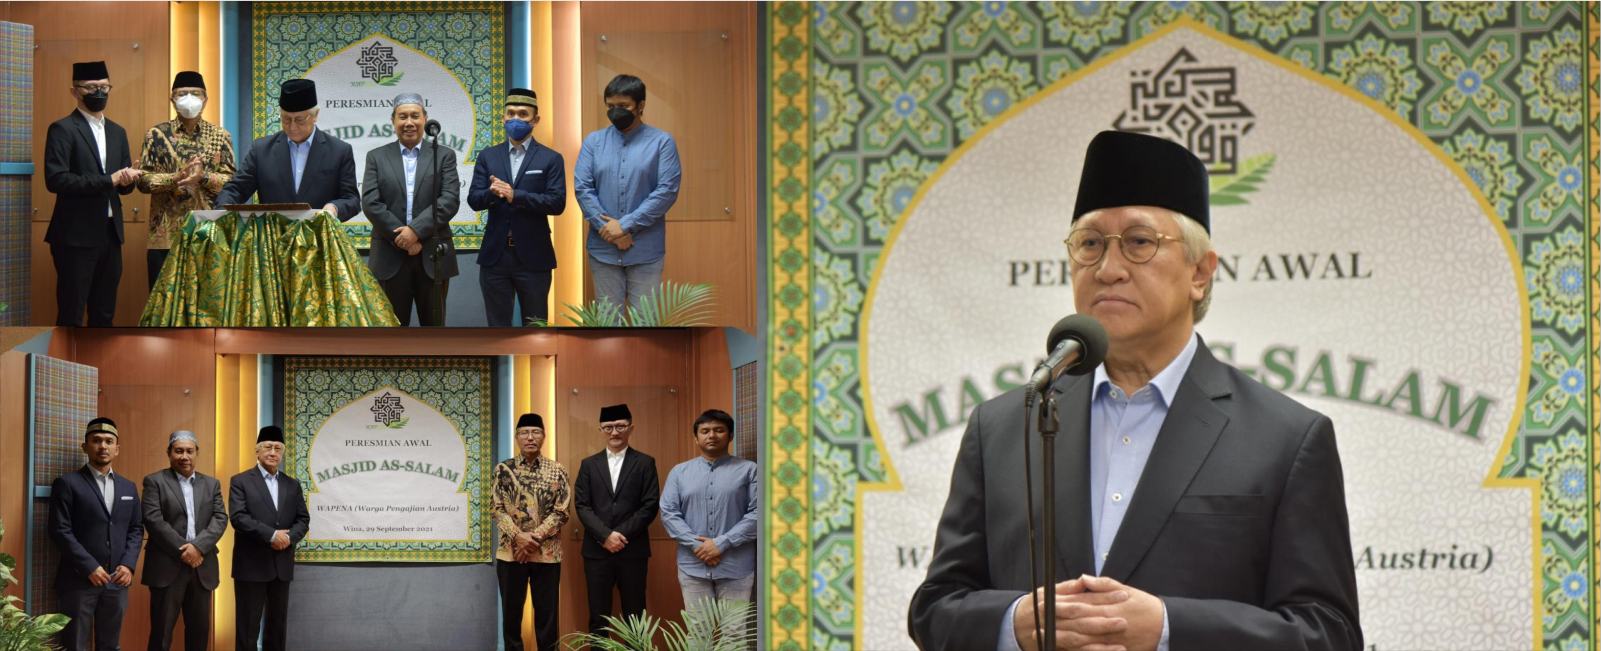 Komunitas Muslim Indonesia Prakasai Masjid Baru di Austria